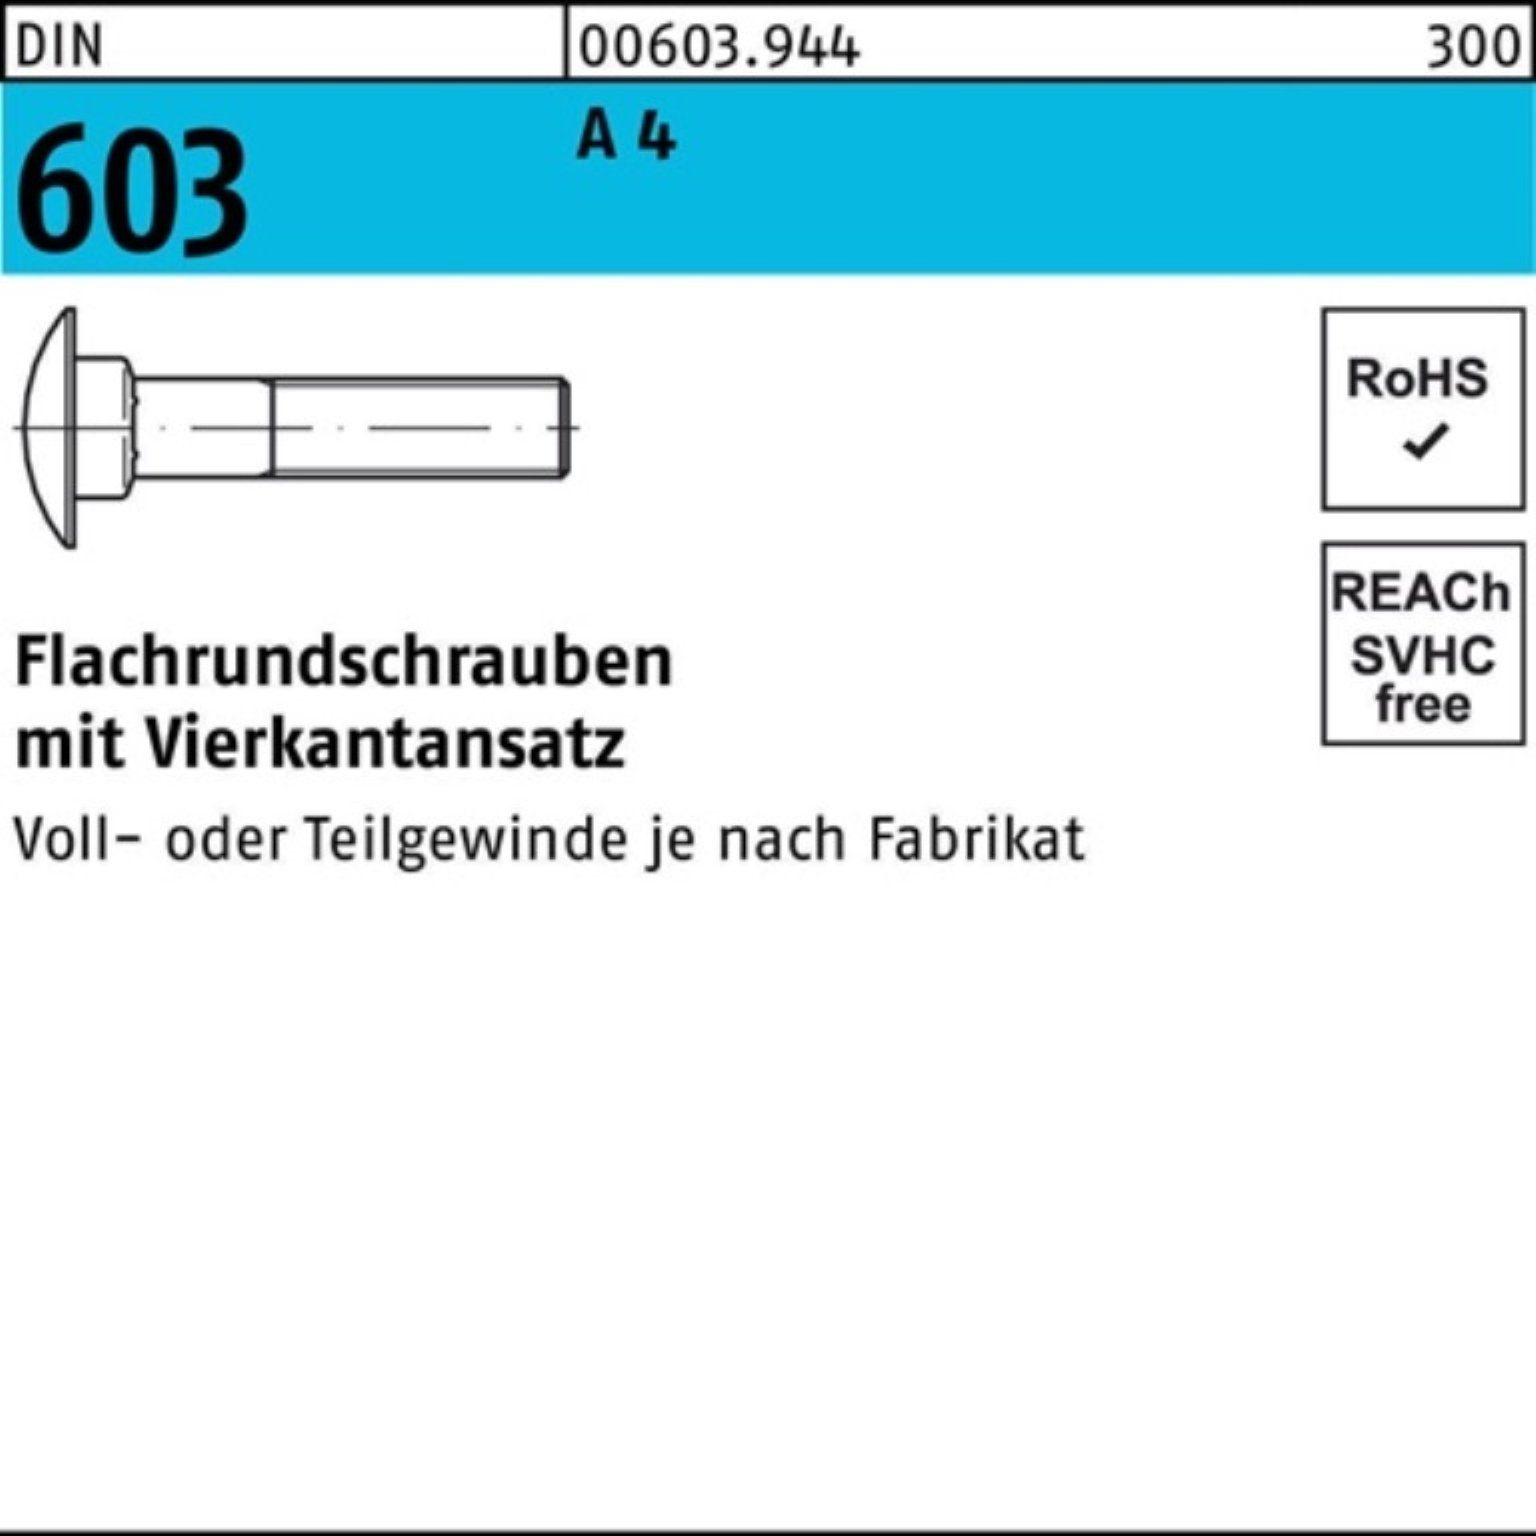 603 10 150 DIN Pack St Vierkantansatz Flachrundschraube A Reyher 4 100er M8x Schraube